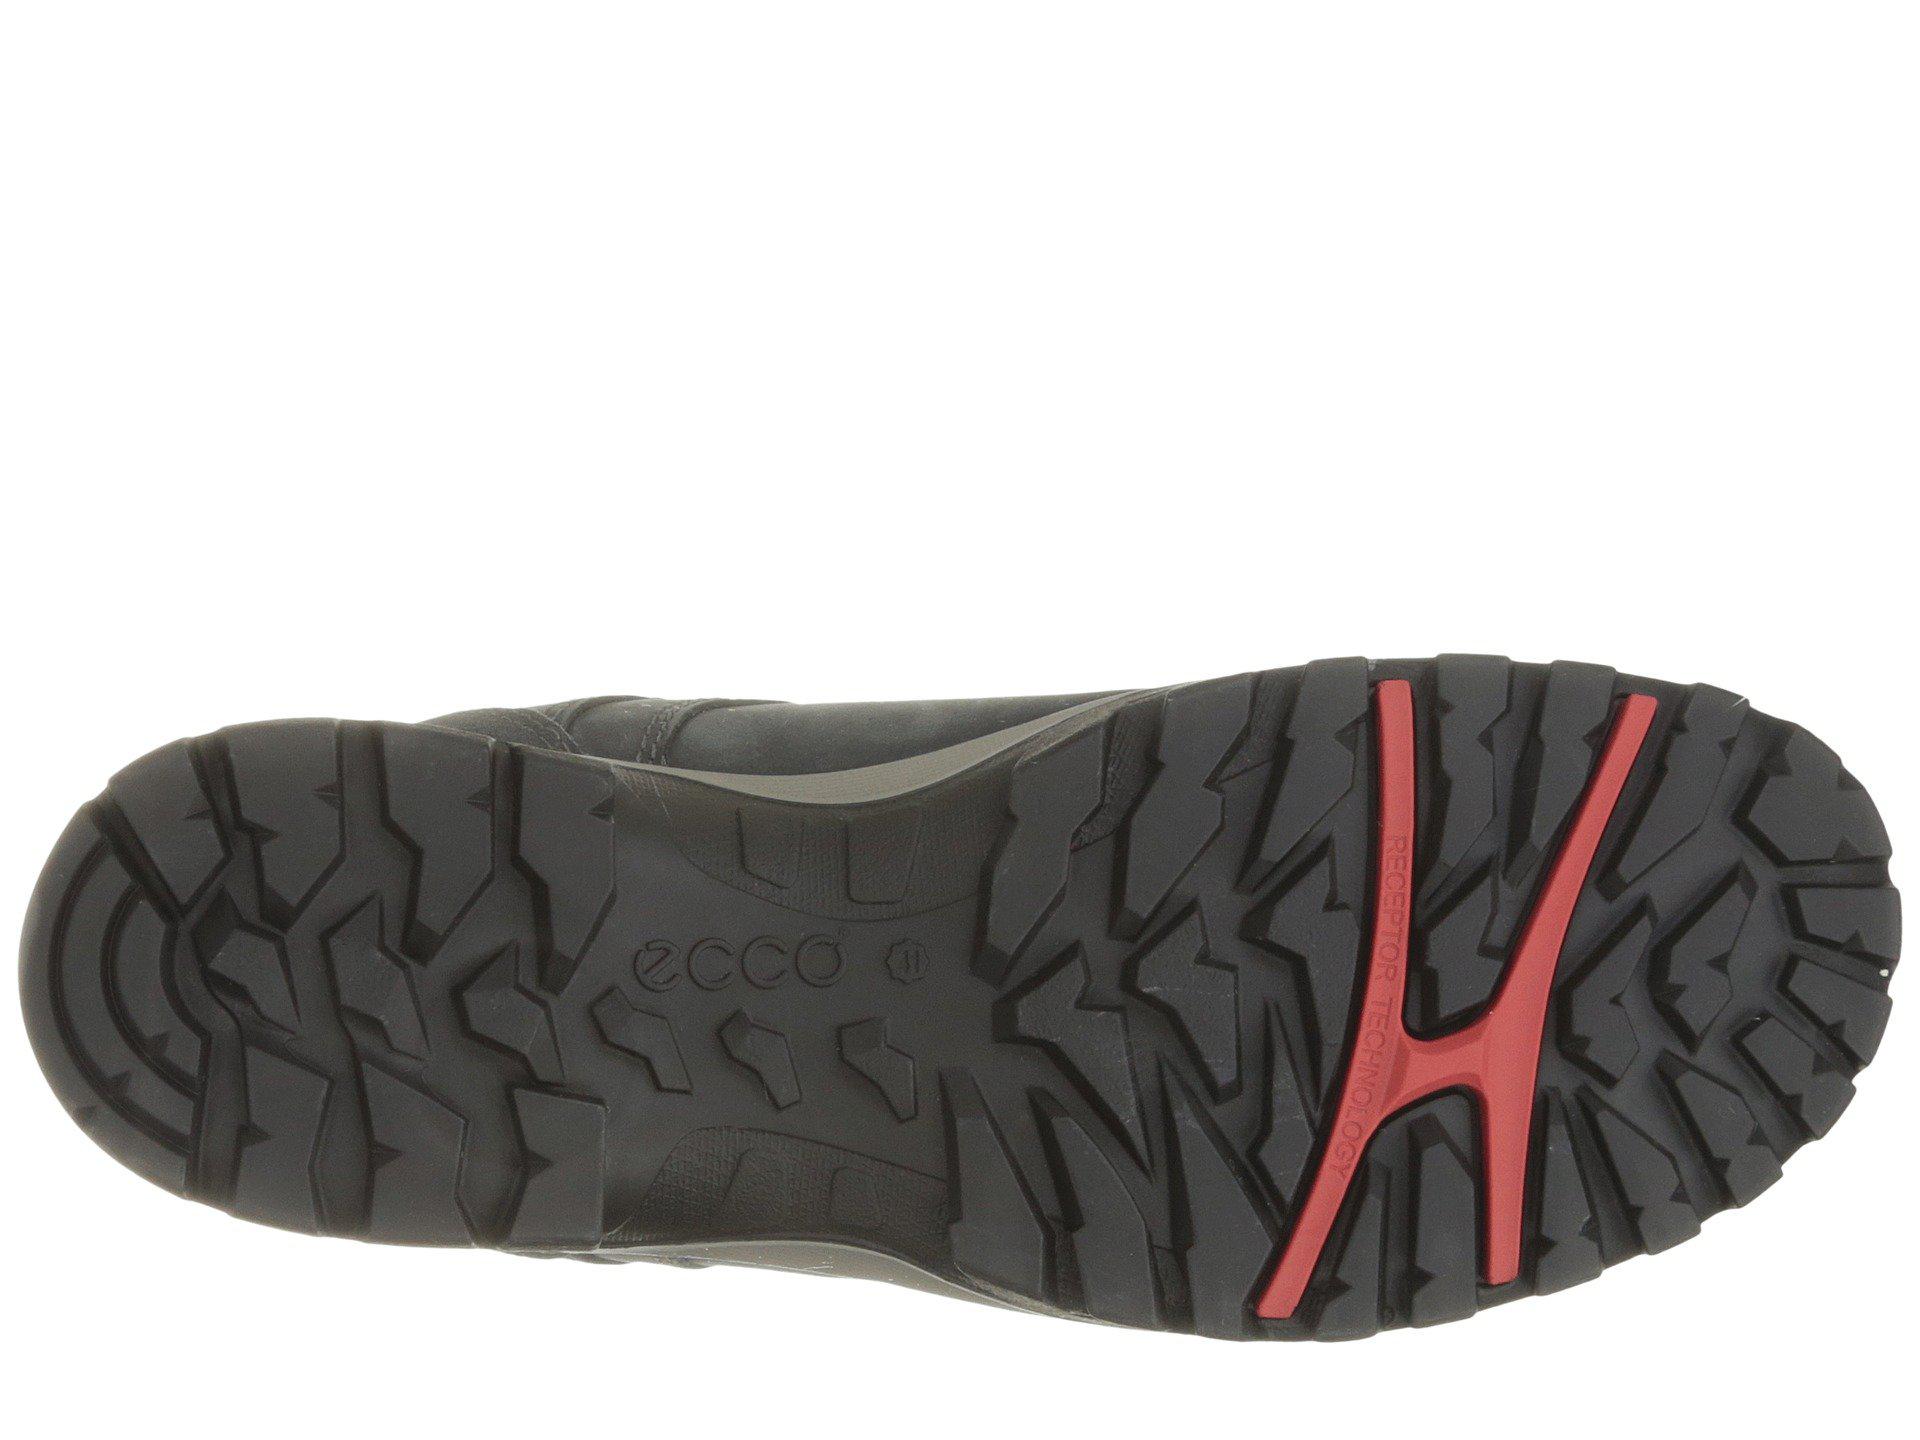 Kvinde Forudsige strukturelt Ecco Leather Xpedition Iii Gtx (coffee) Women's Hiking Boots - Lyst